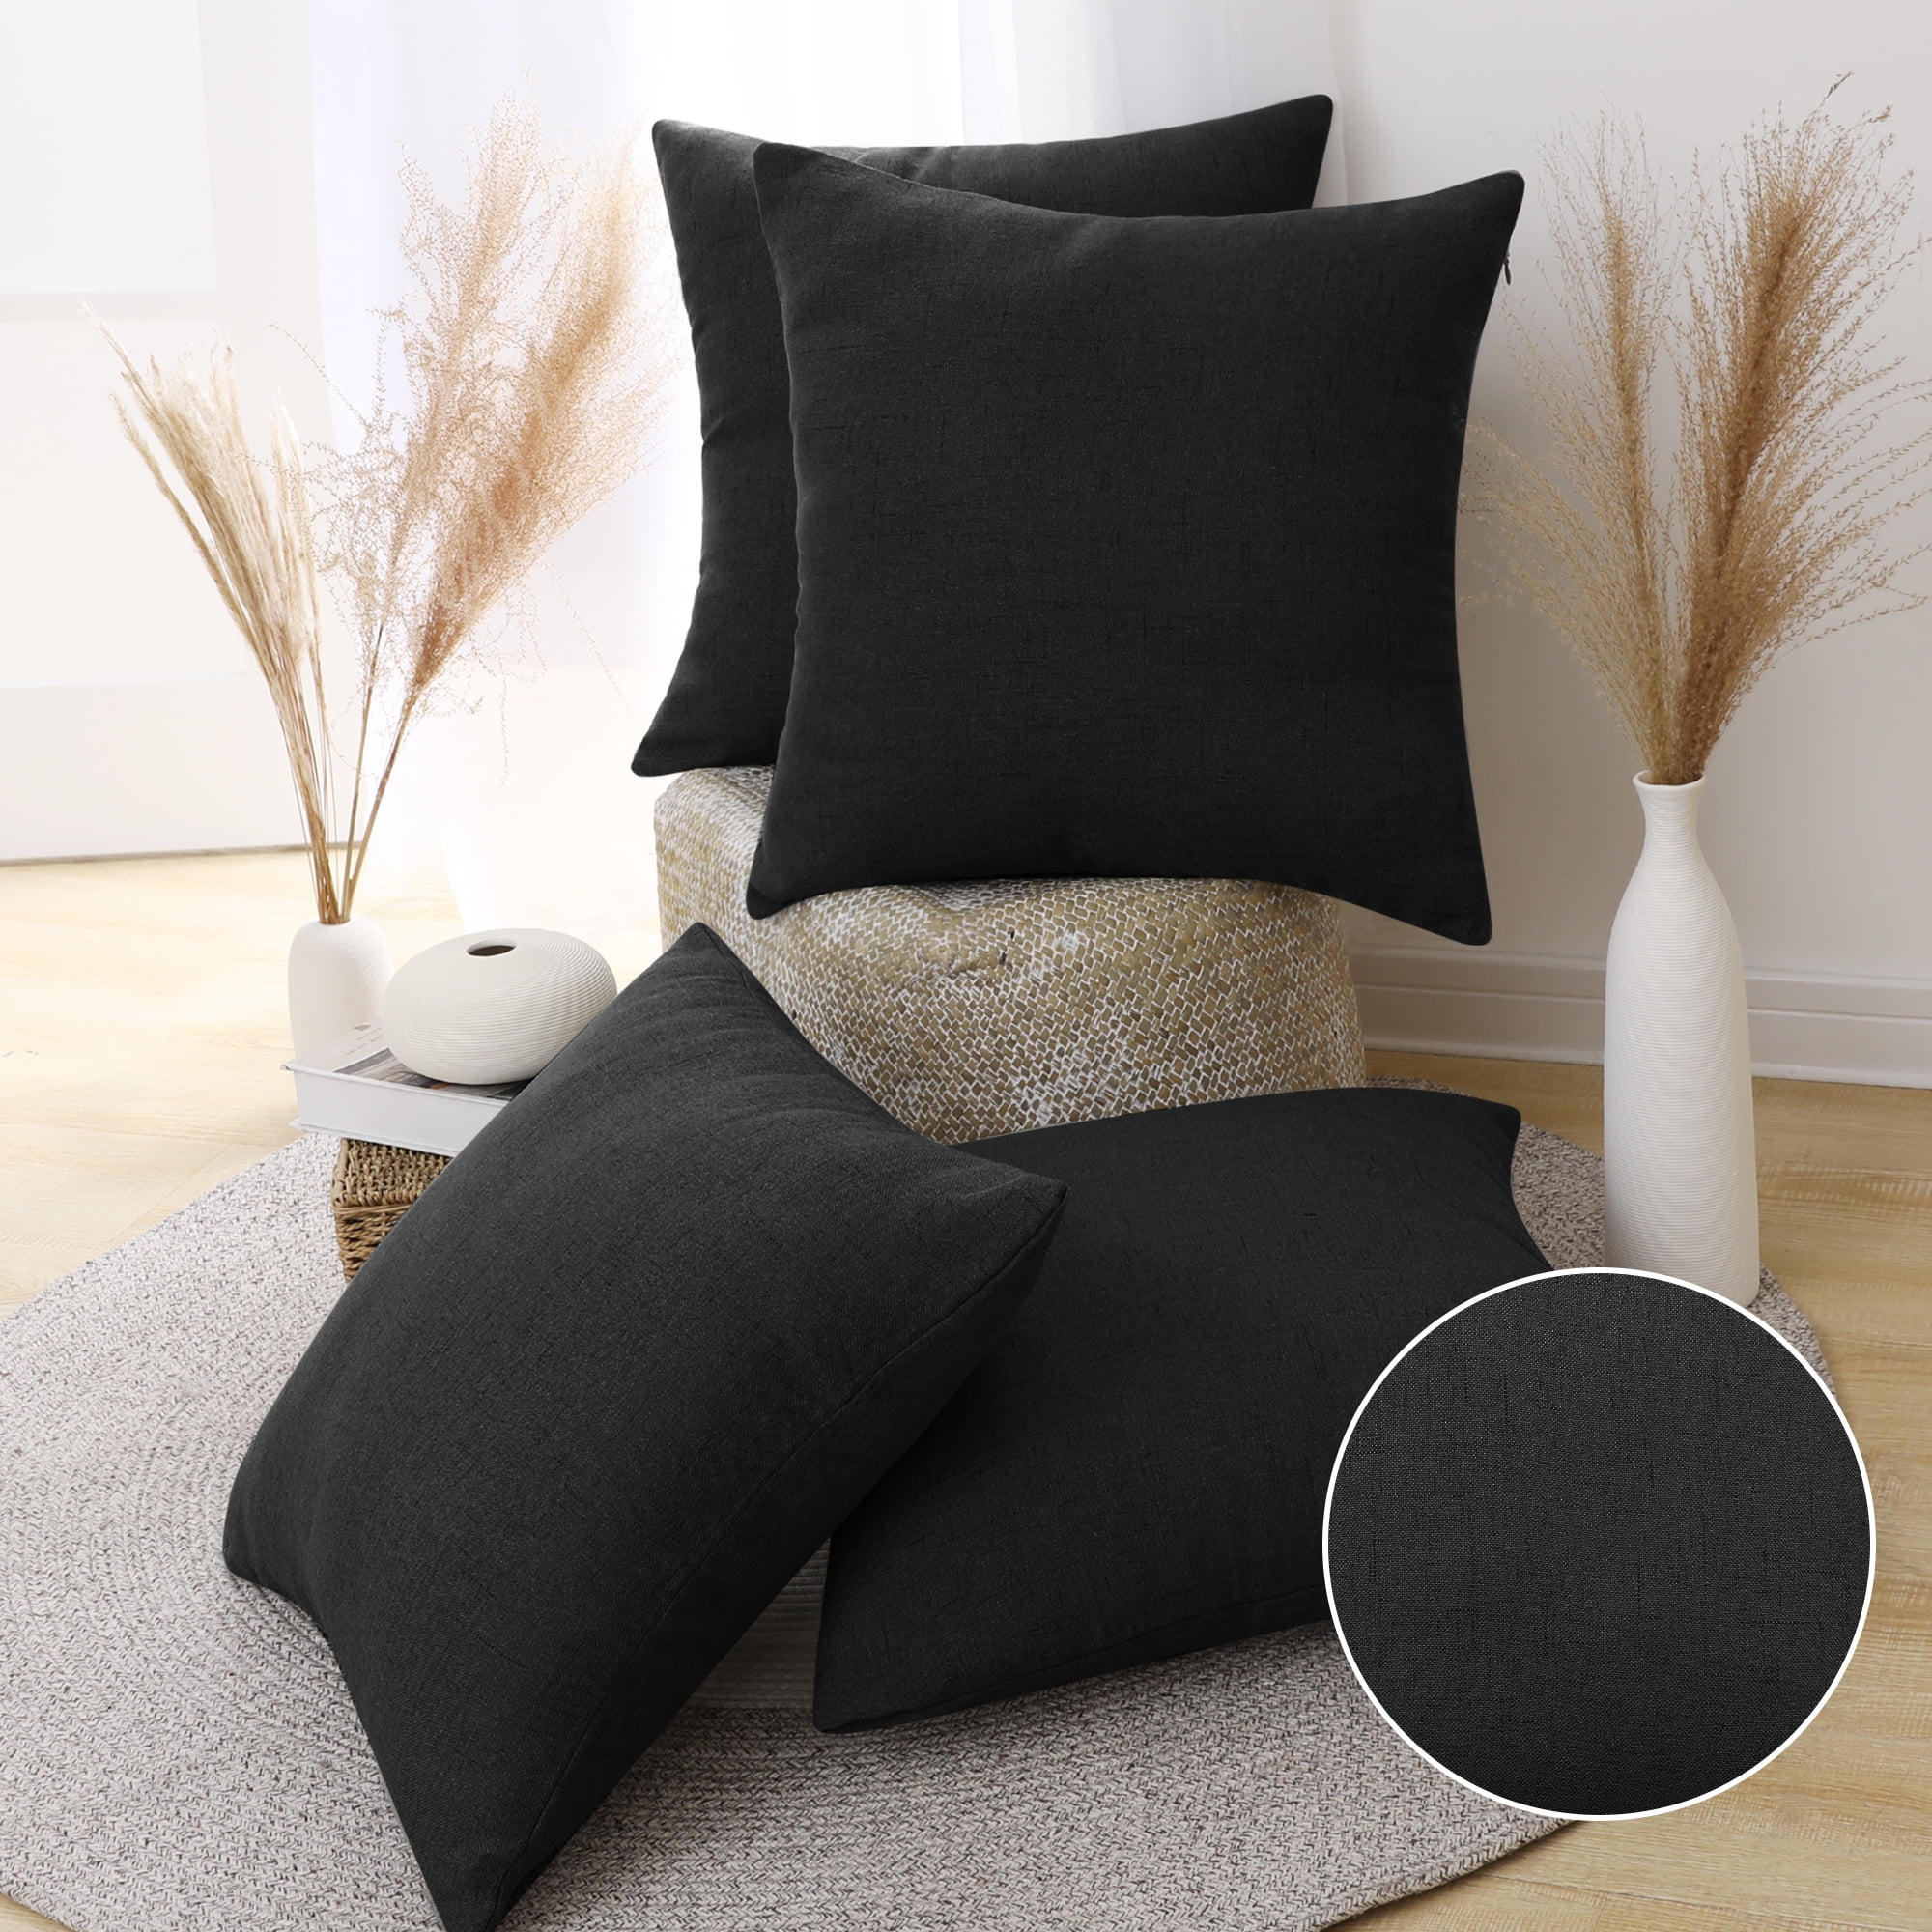 Rustic Deer Elk Home Sofa Bedroom Decor Cushion Cover Cotton Linen Pillow Case 